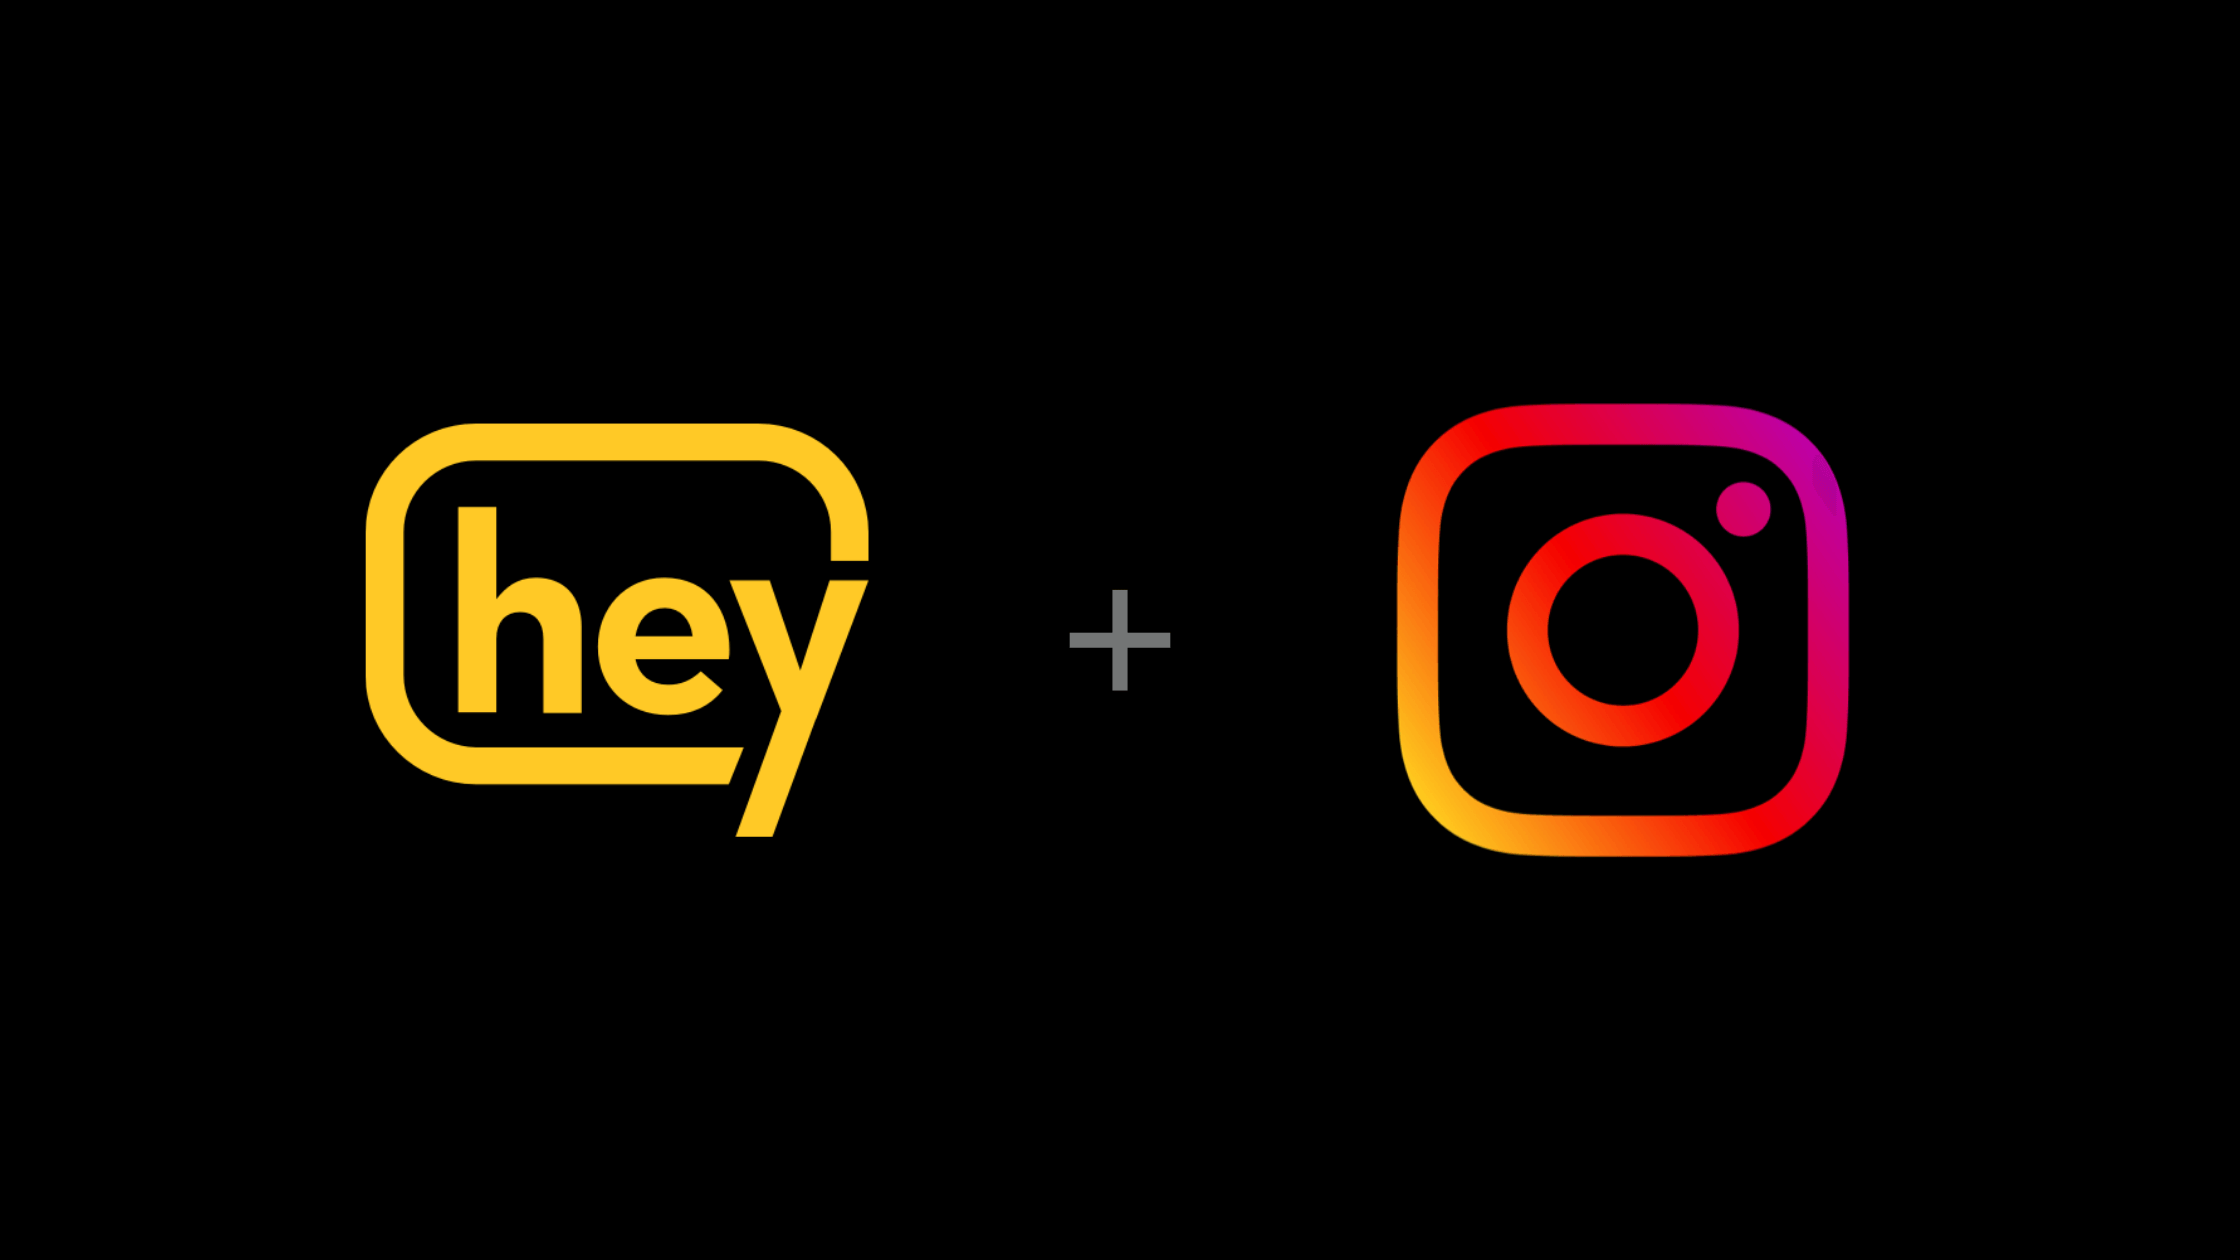 Heymarket and Instagram Logos, showing that Heymarket now supports Instagram Business Messaging